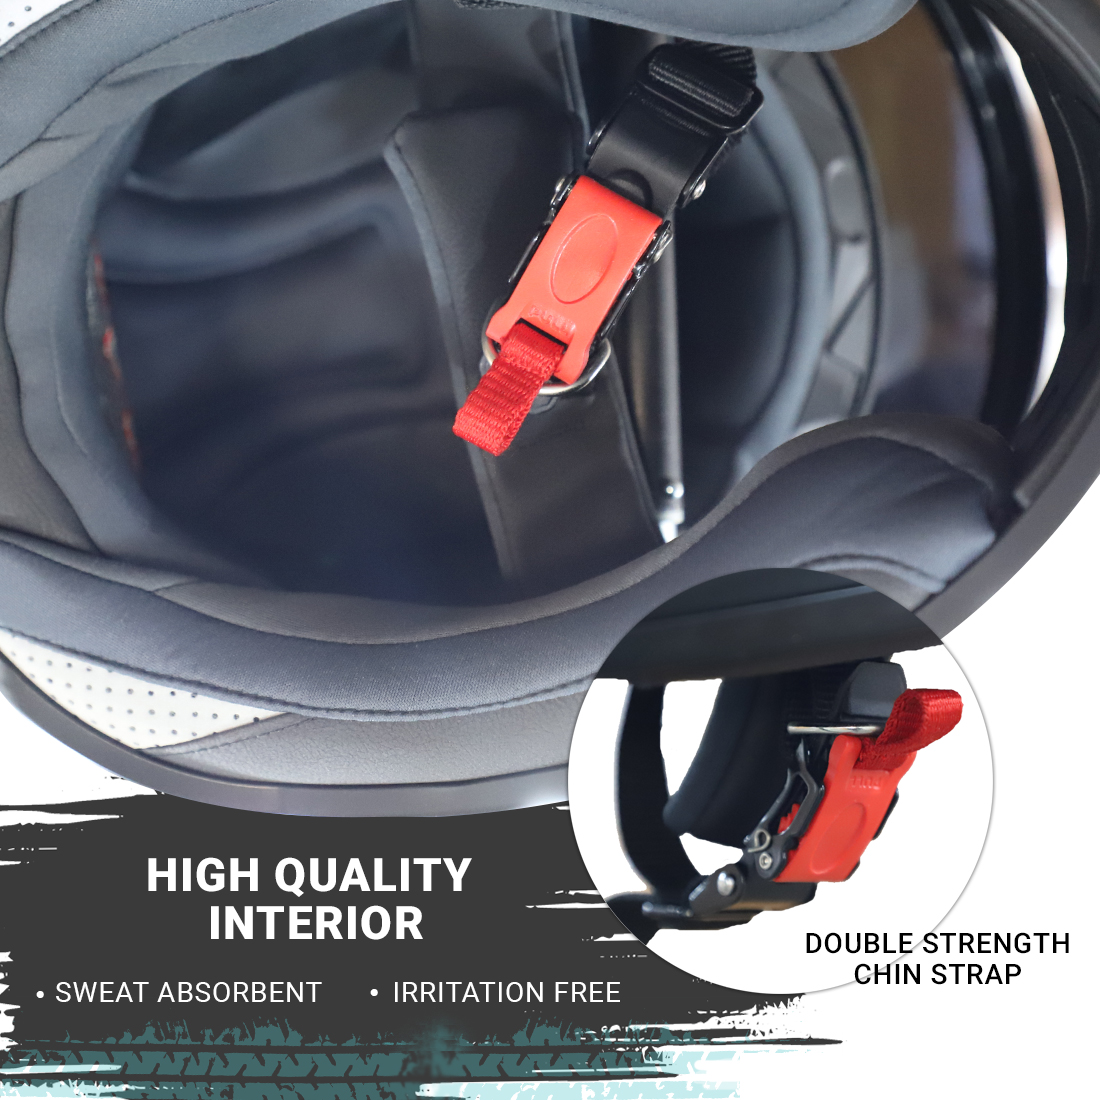 Steelbird SBH-17 Terminator ISI Certified Full Face Graphic Helmet (Matt Black Fluo Blue With Chrome Rainbow Visor)